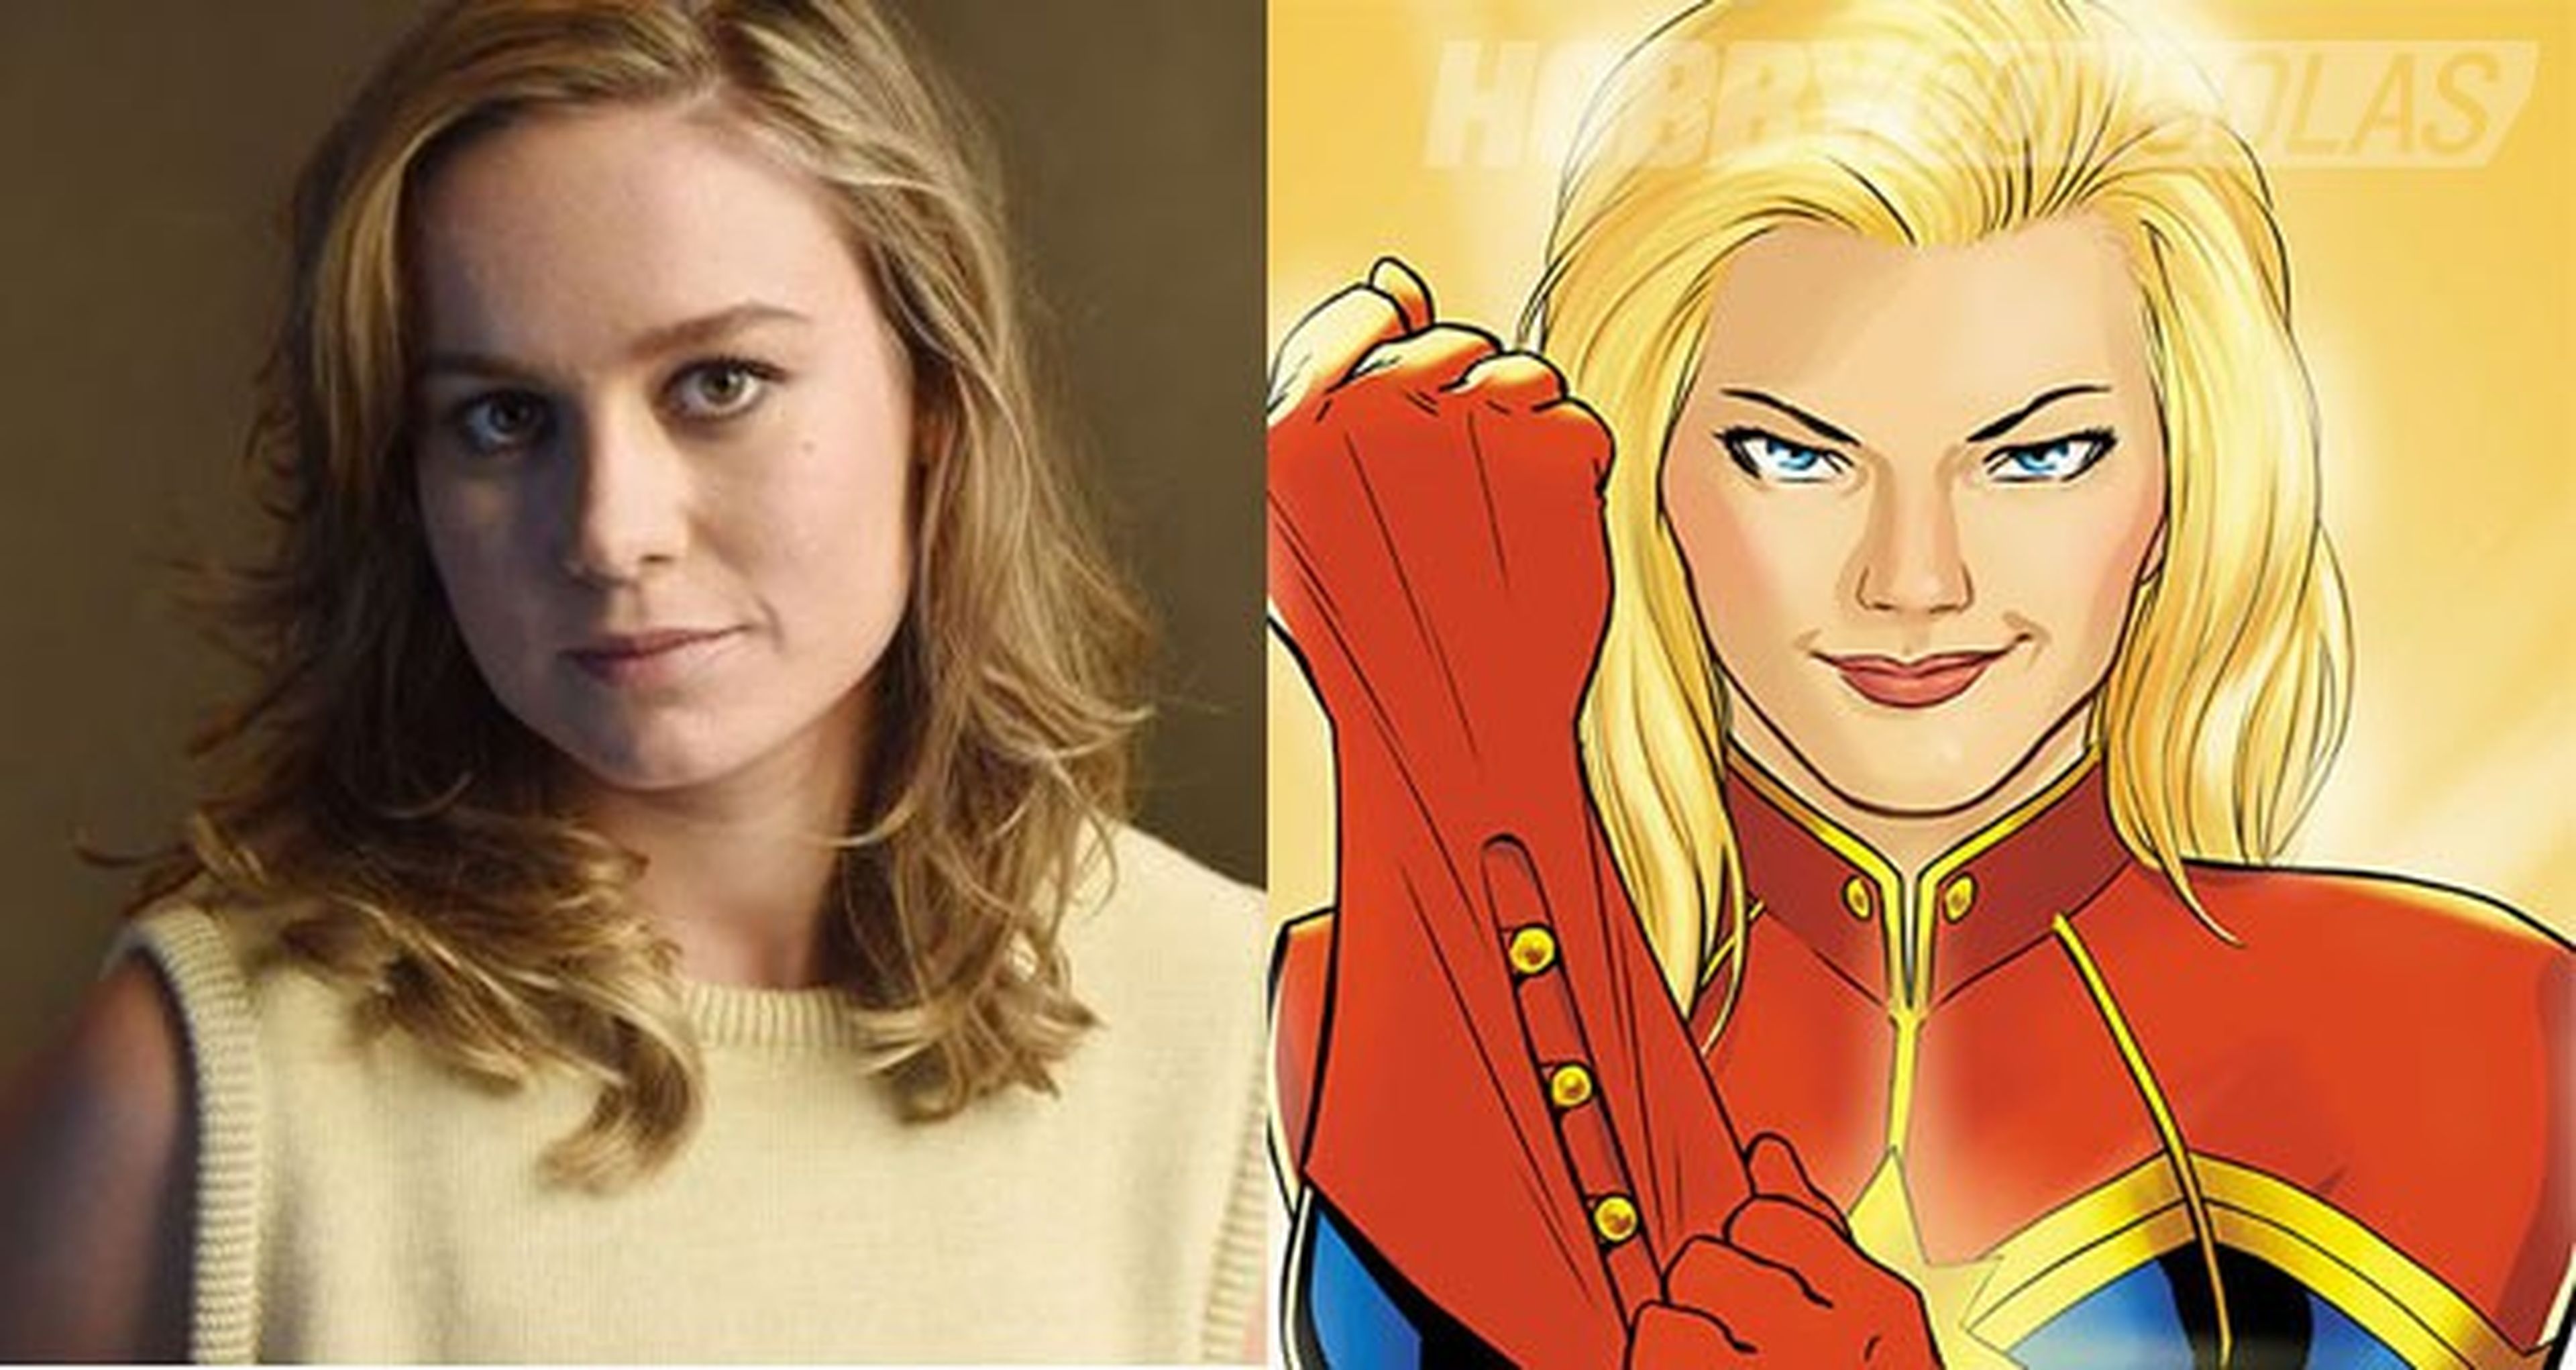 Capitana Marvel – Brie Larson es la candidata ideal y dan nombres de posibles directoras